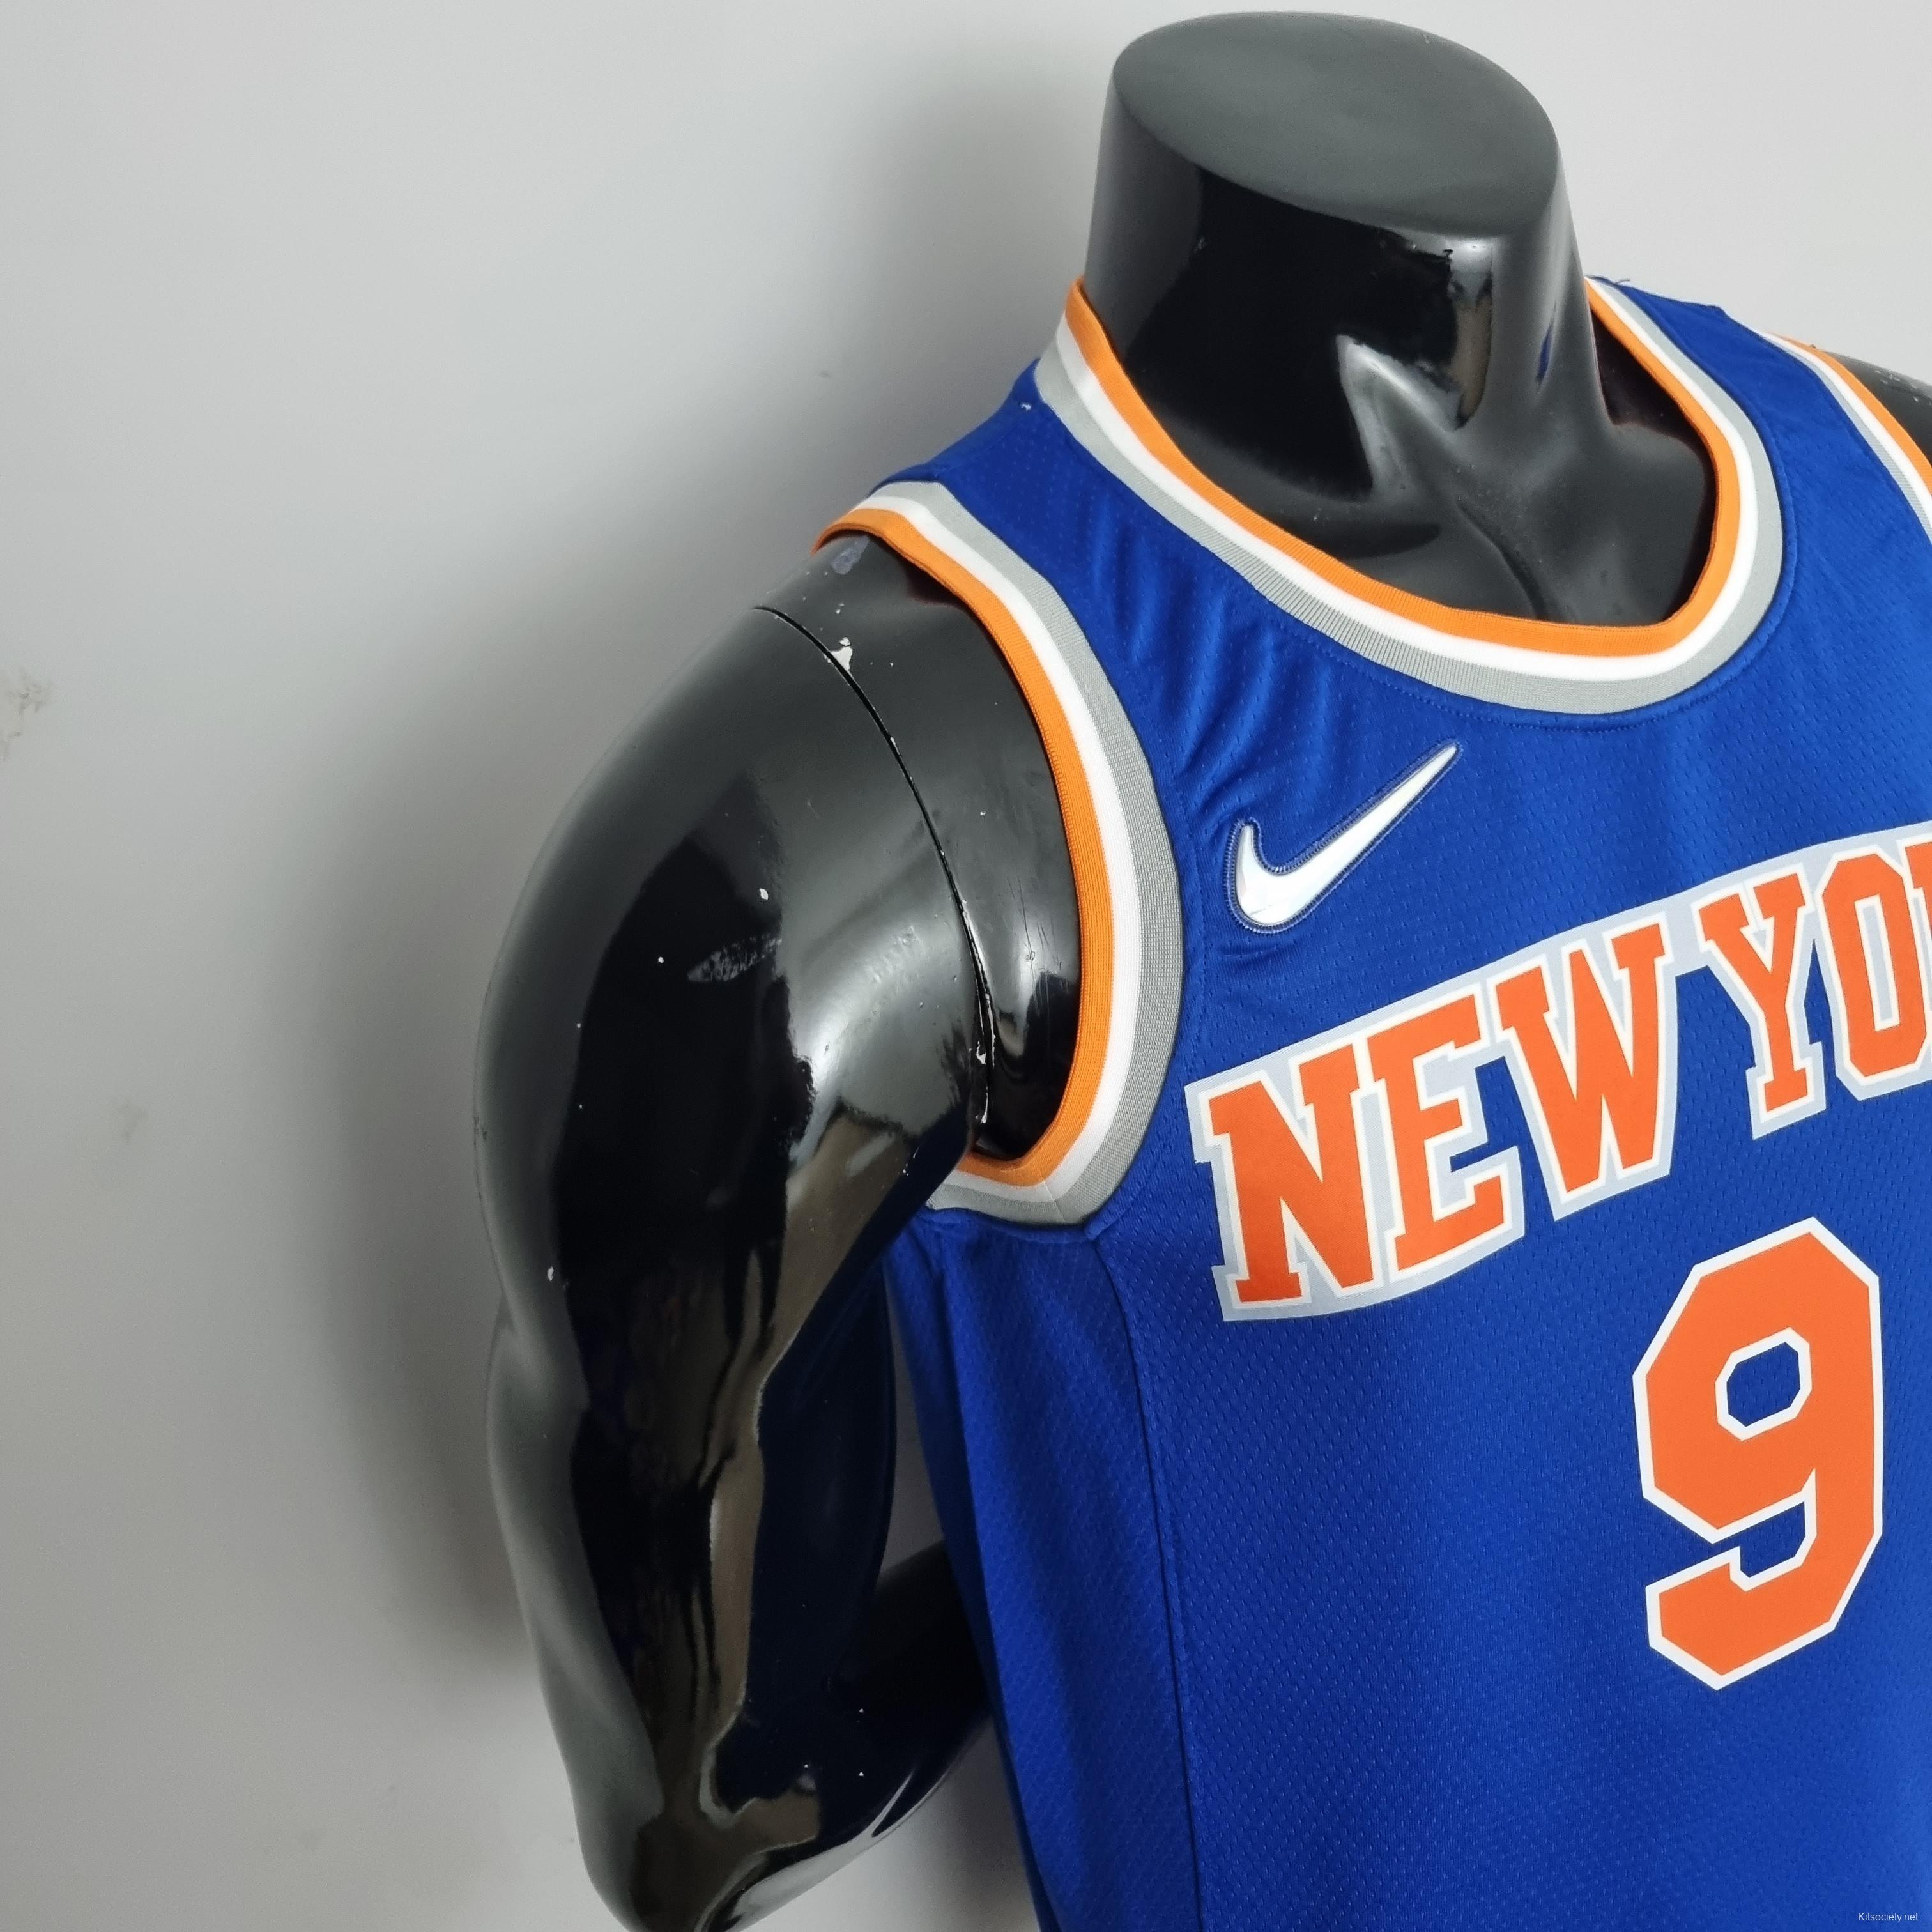 New York Knicks RANDLE #30 Striped NBA Jersey - Kitsociety